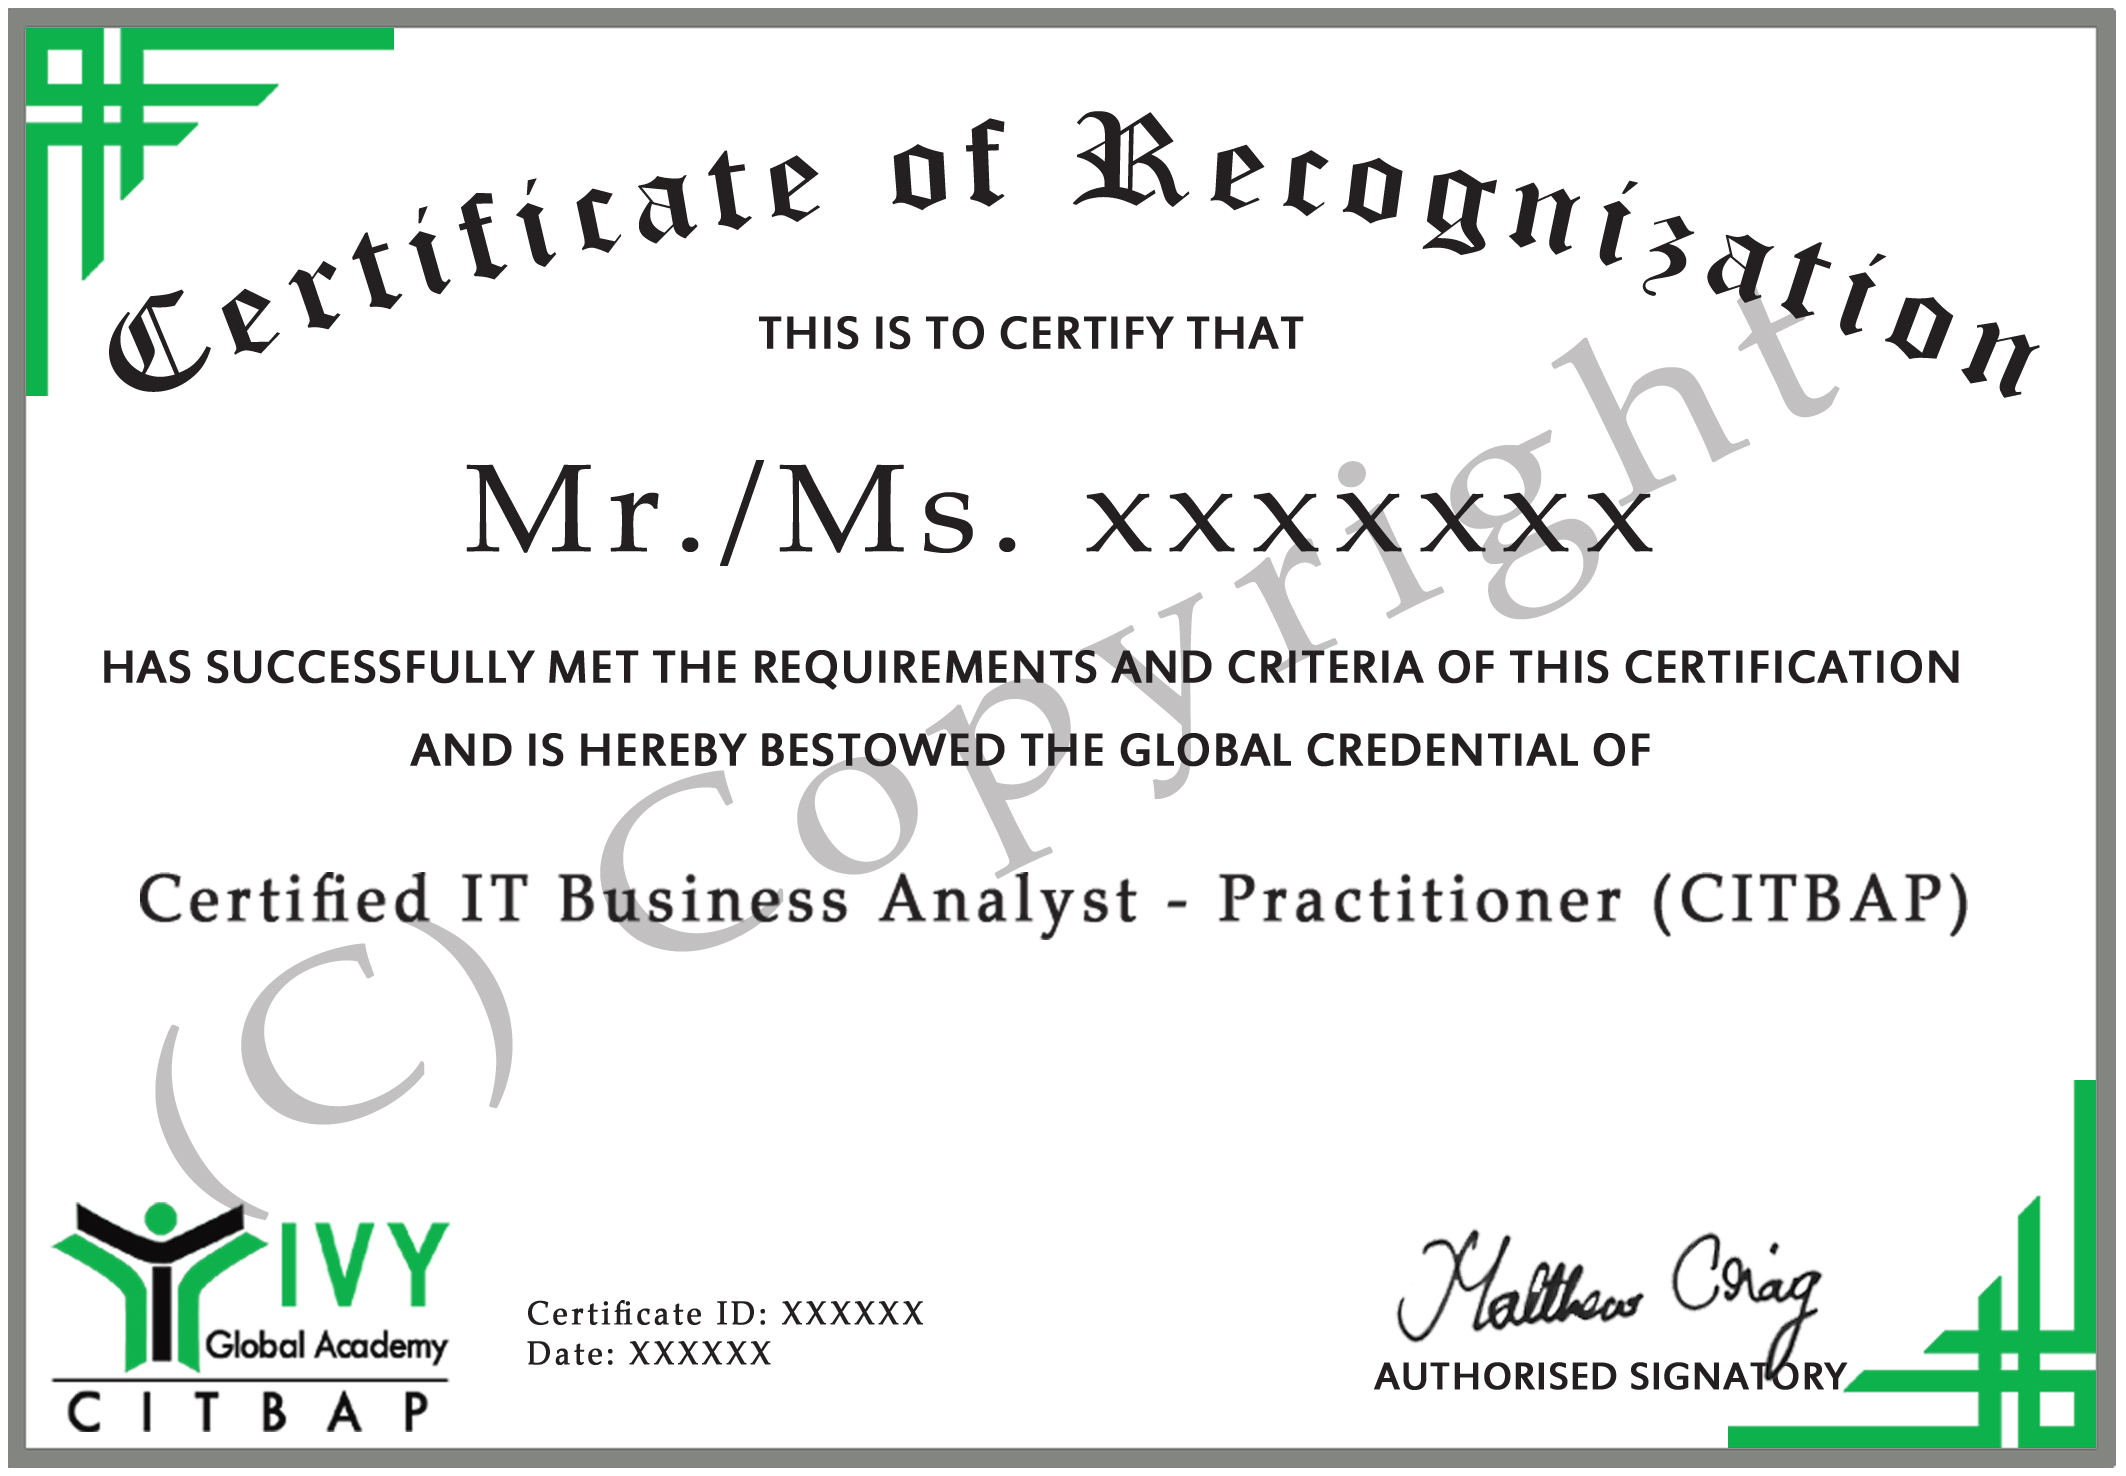 CITBAP Certificate